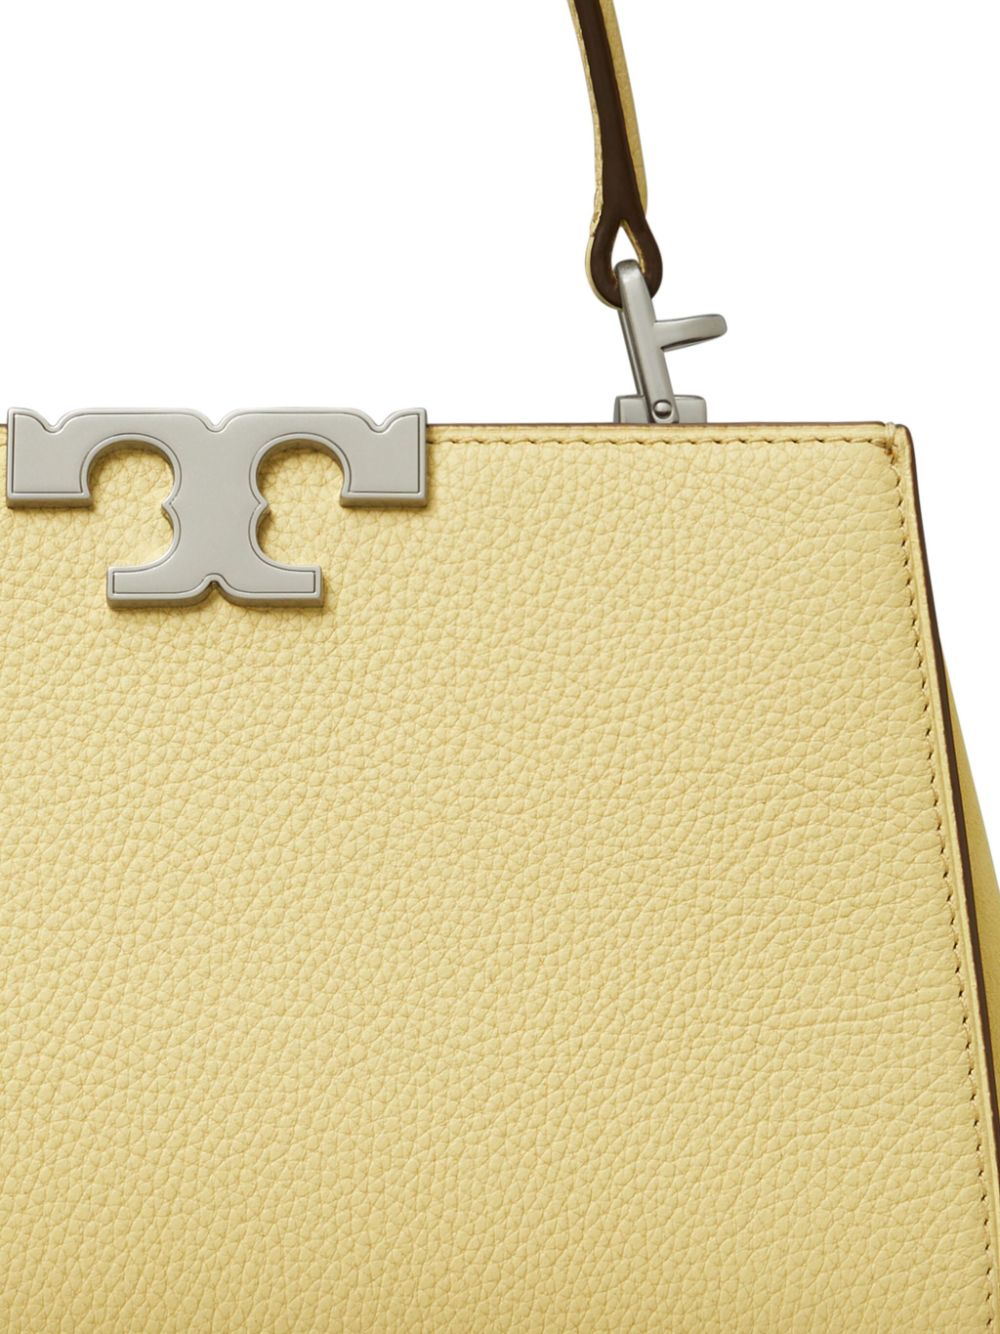 Lemon Yellow Grained Leather Tote Handbag with Logo Plaque